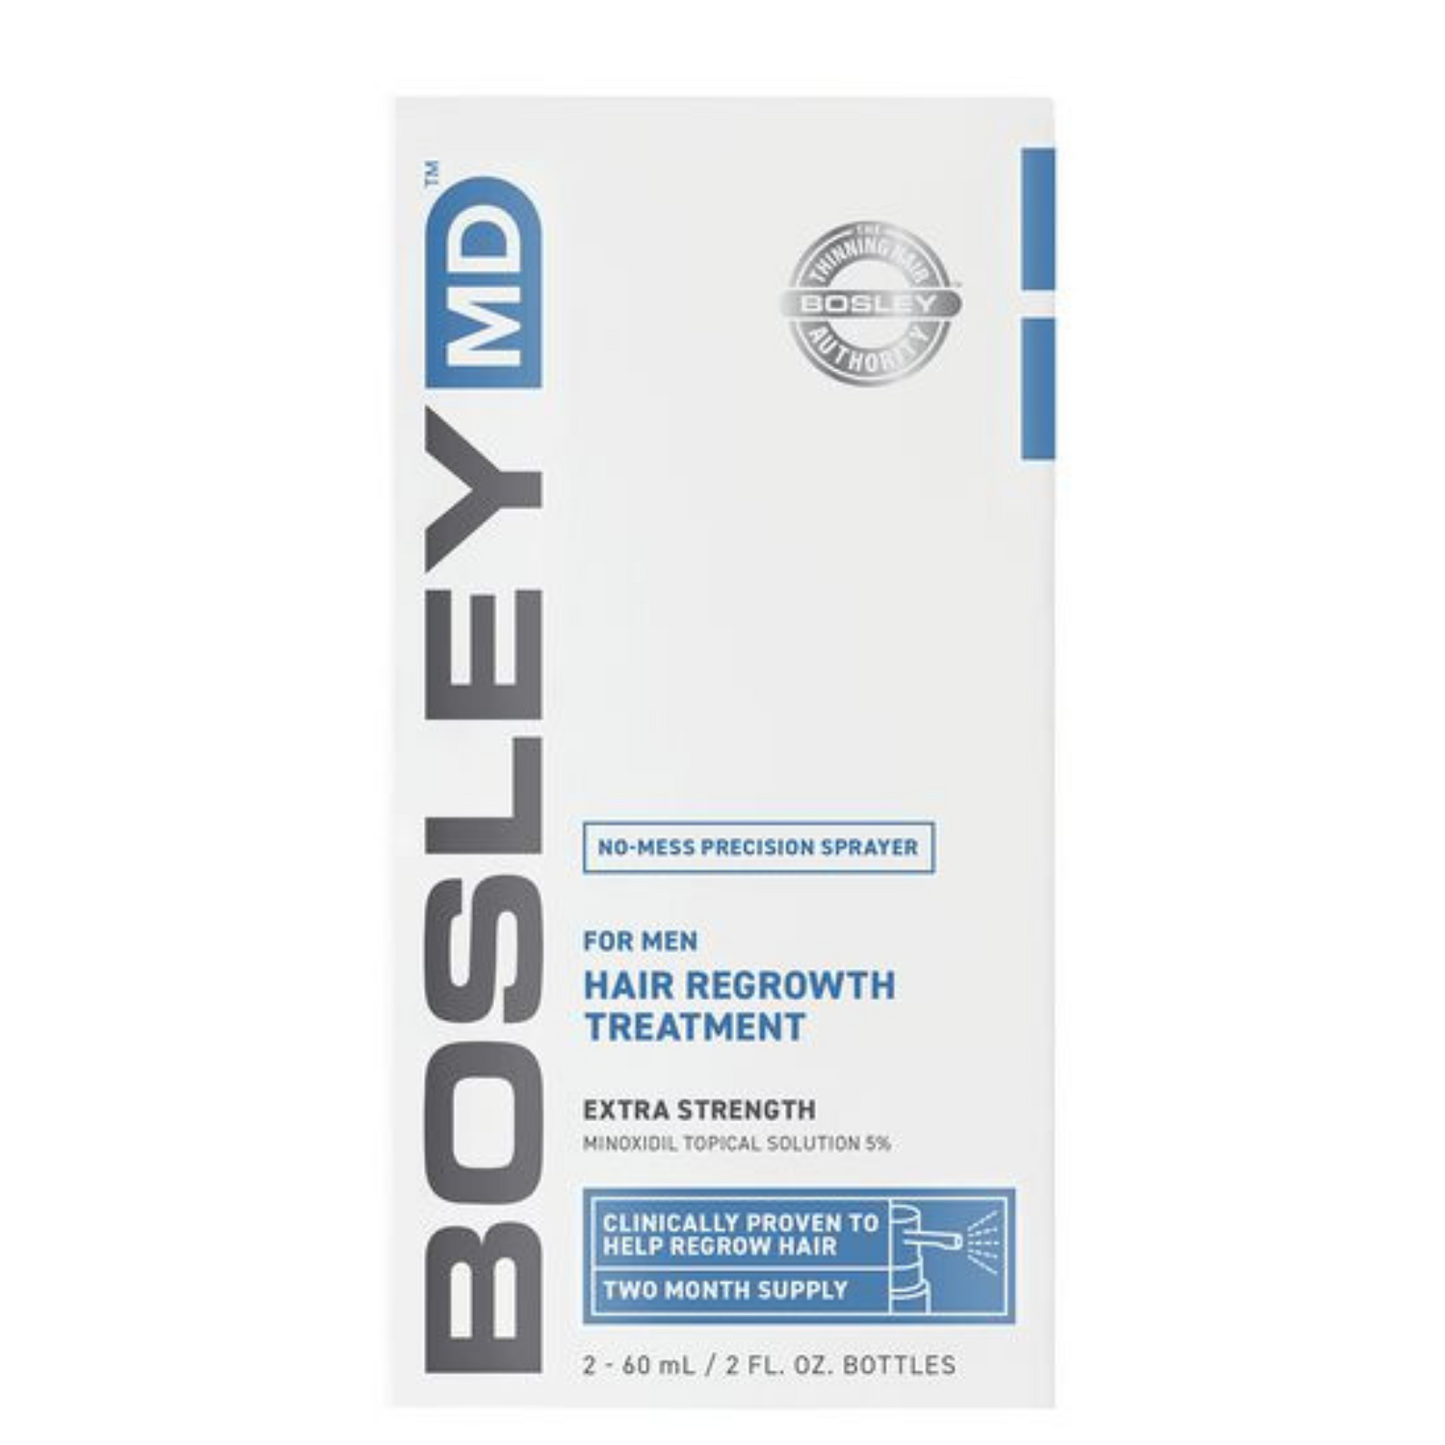 BosleyMD - Hair Regrowth Treatment Spray for Men